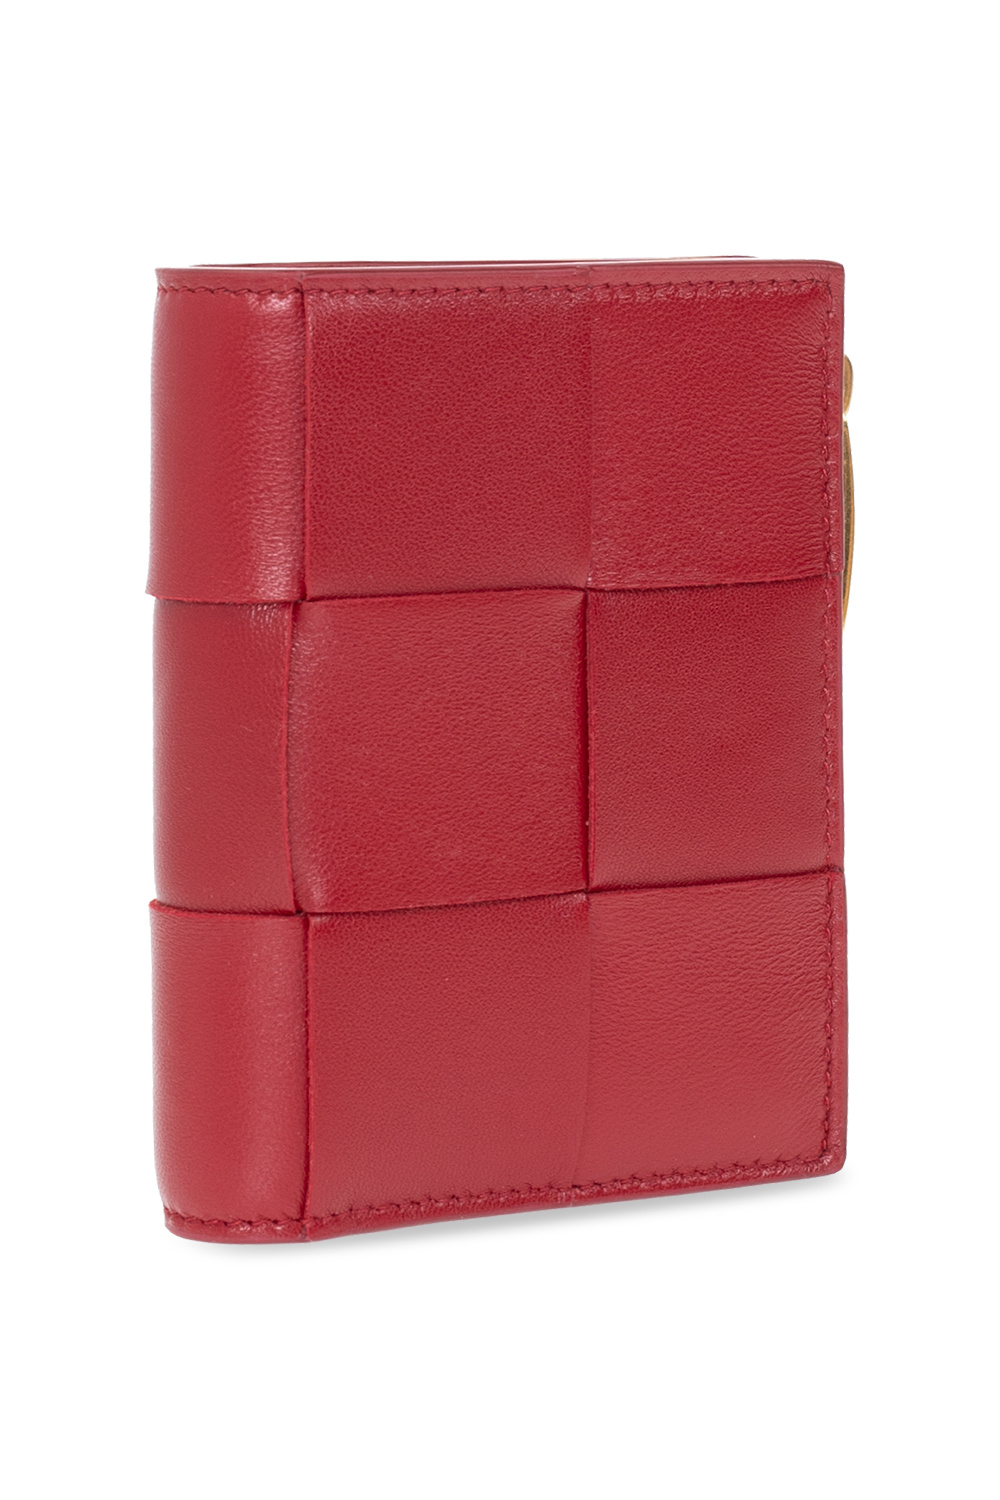 Bottega Veneta ‘B-Fold’ wallet